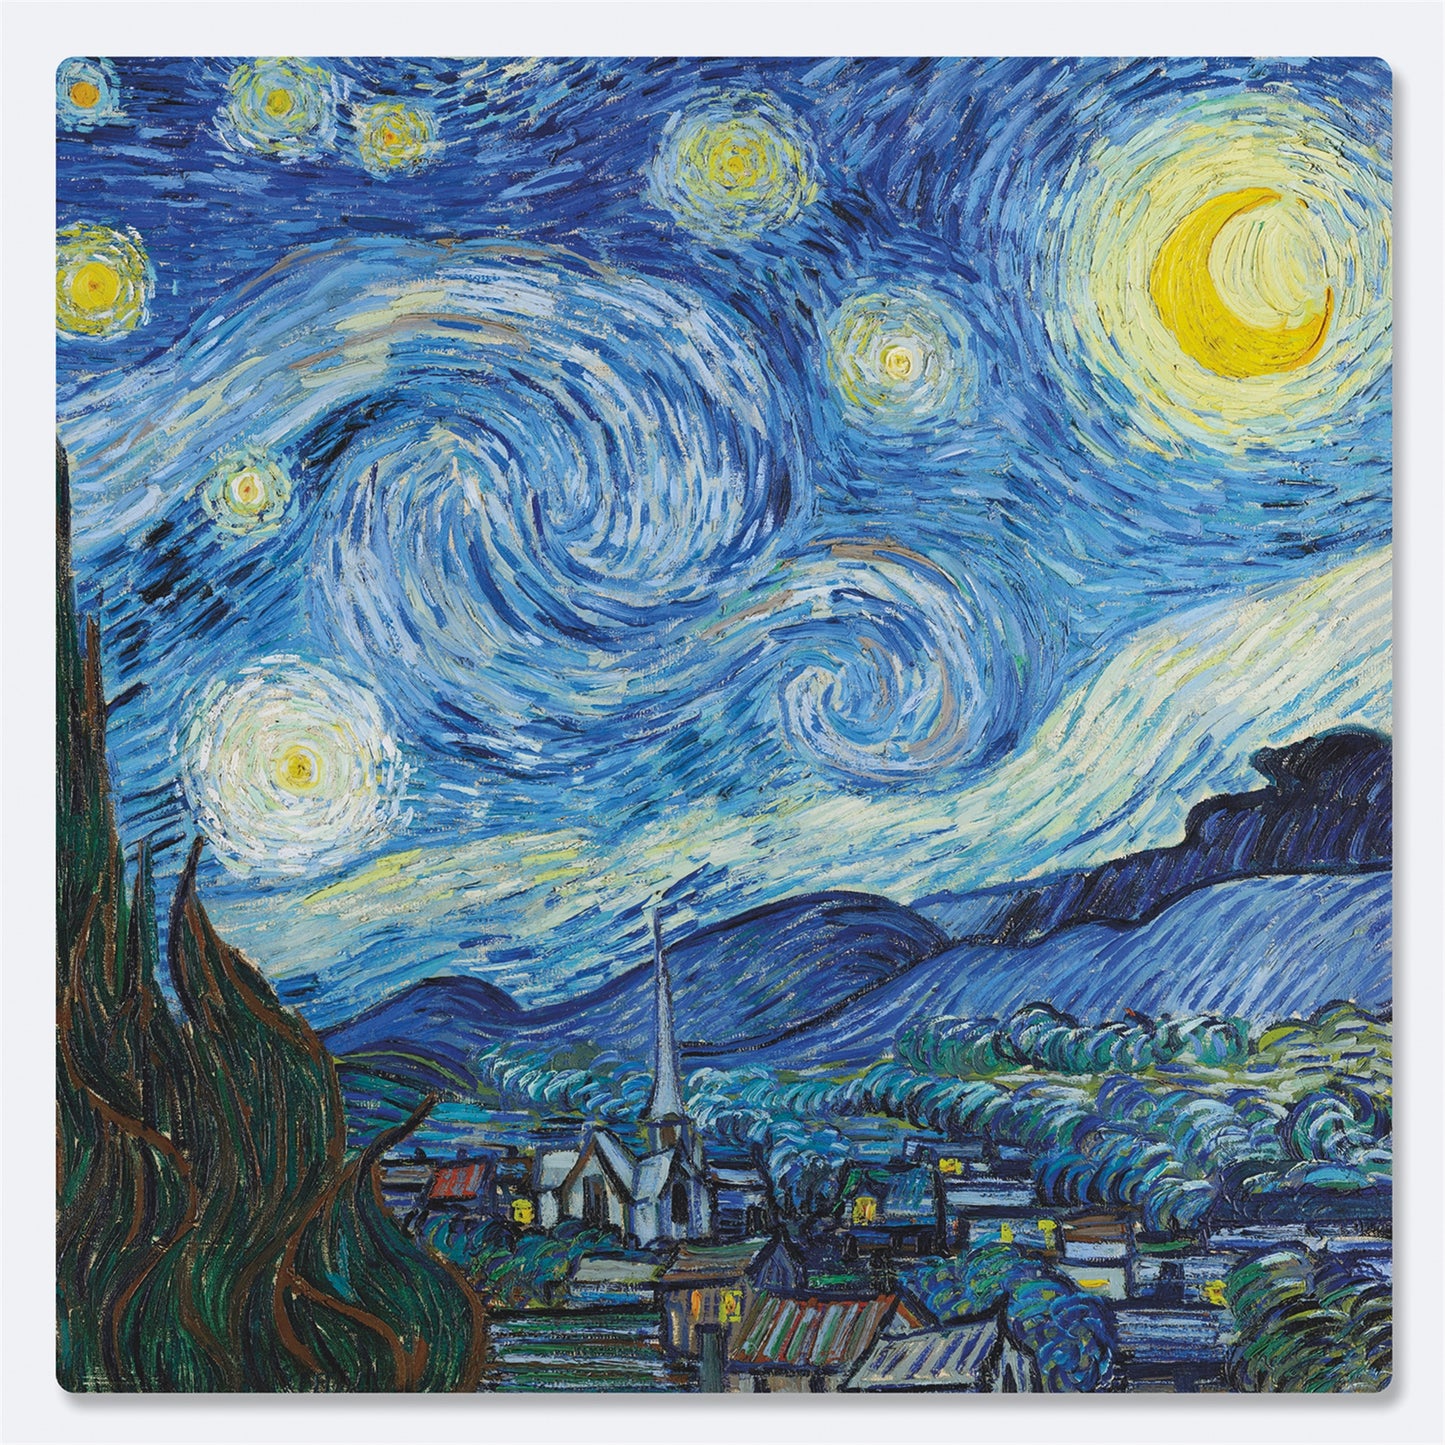 Van Gogh's "Starry Night" Porcelain Trivet